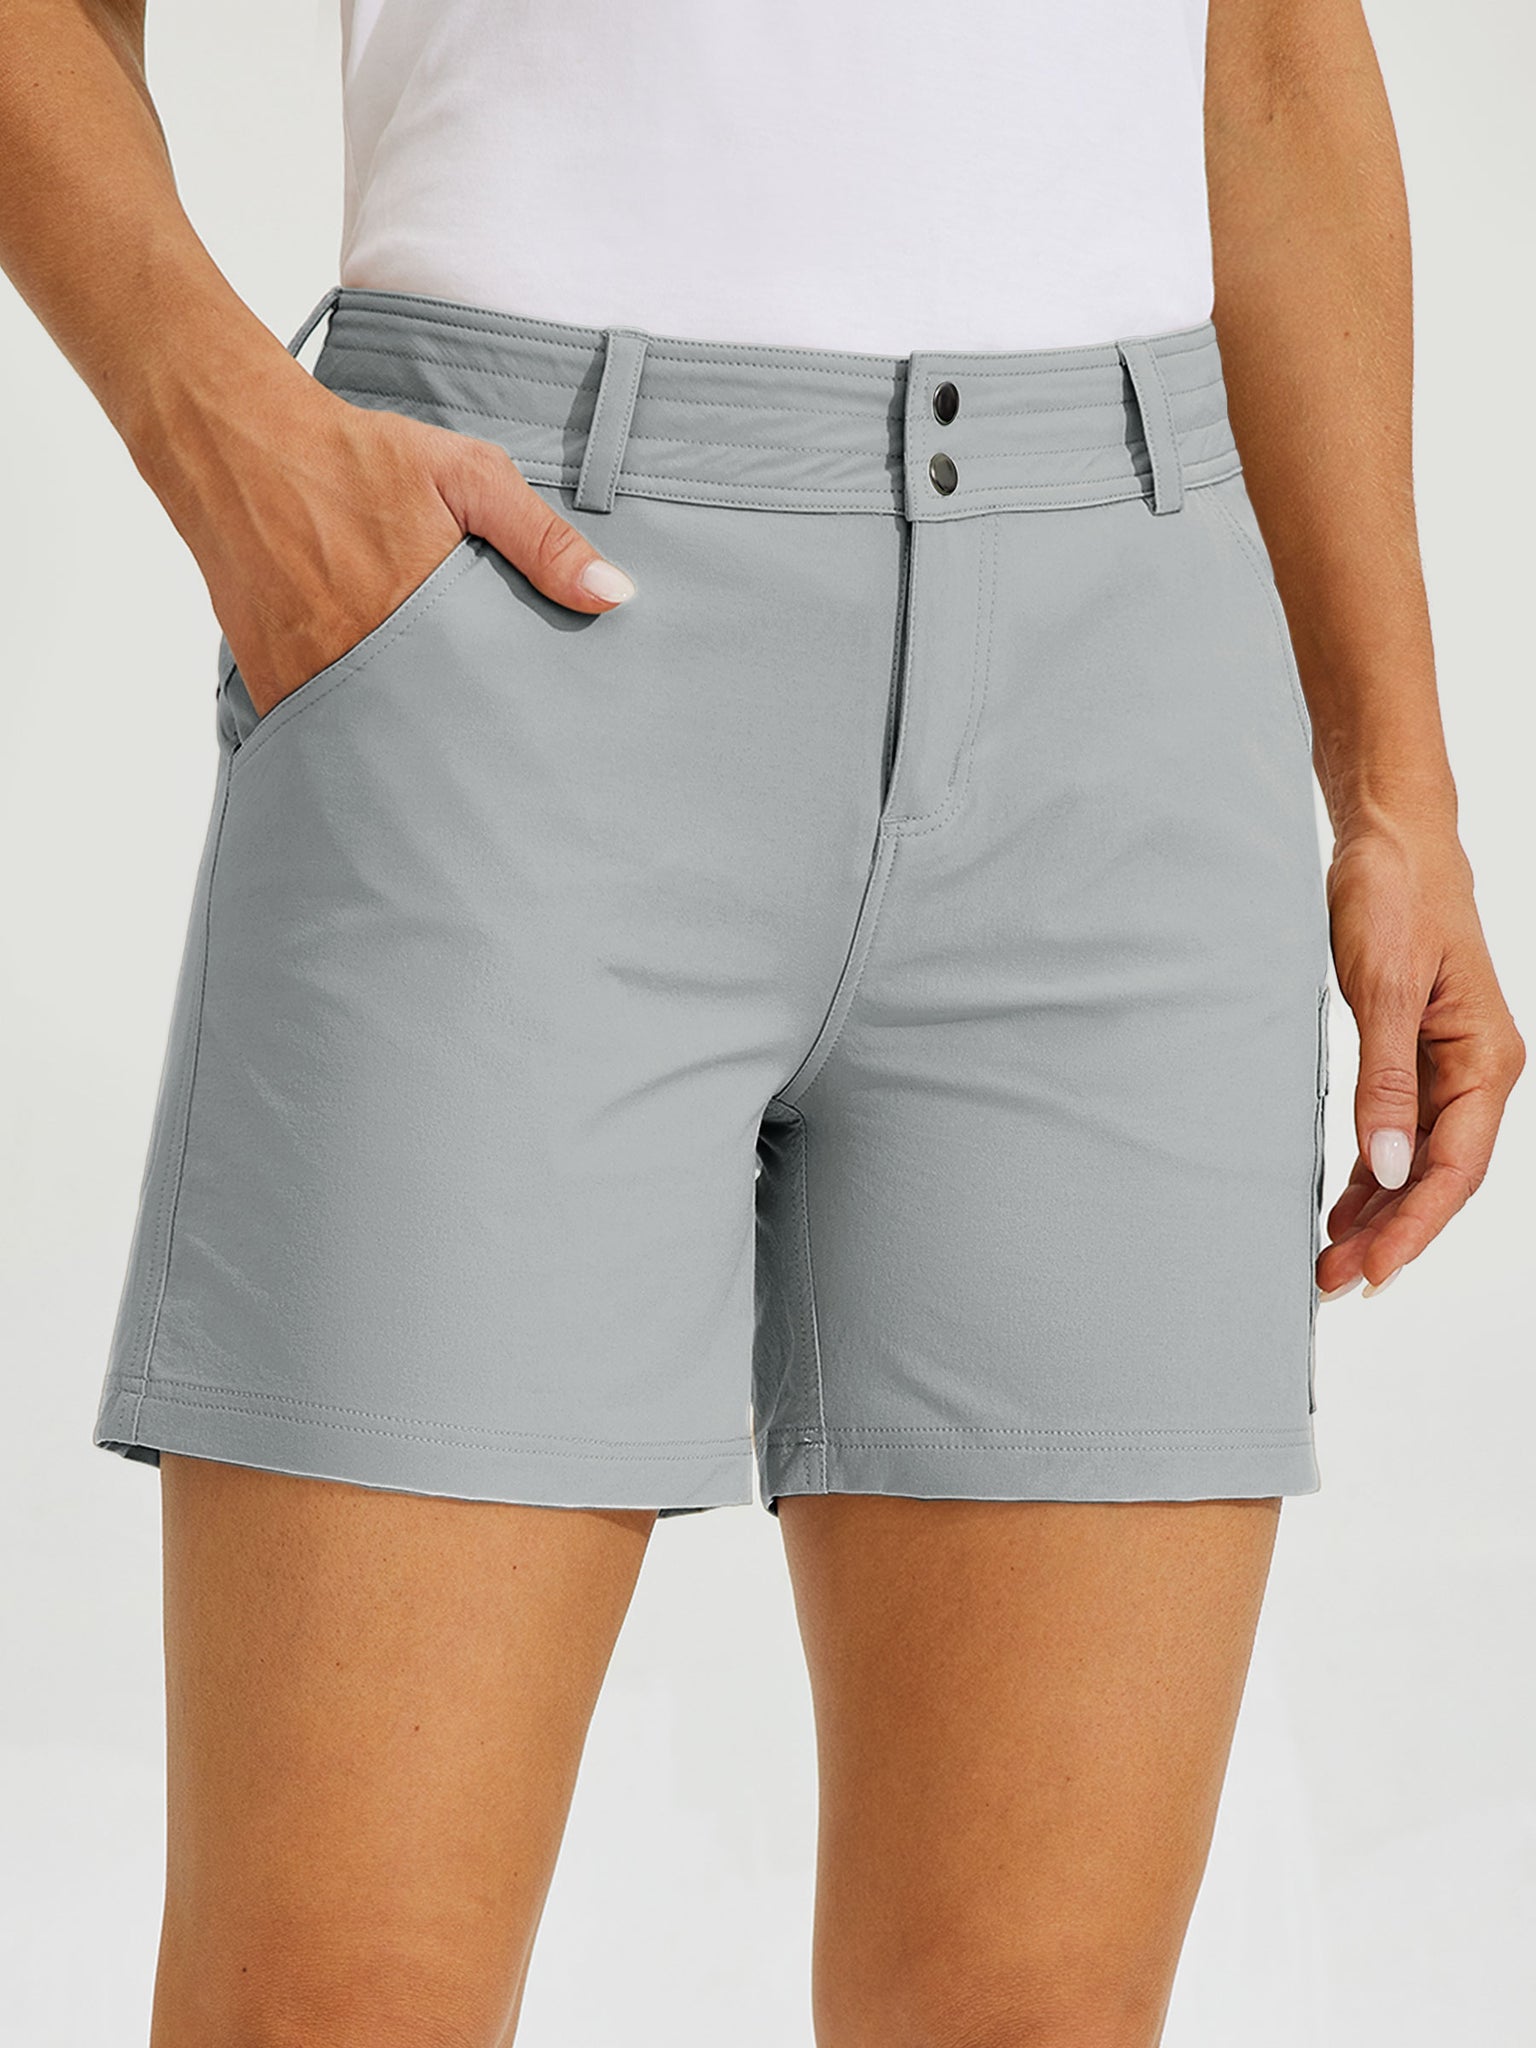 Women's Outdoor Pro Shorts 5Inch_Gray1